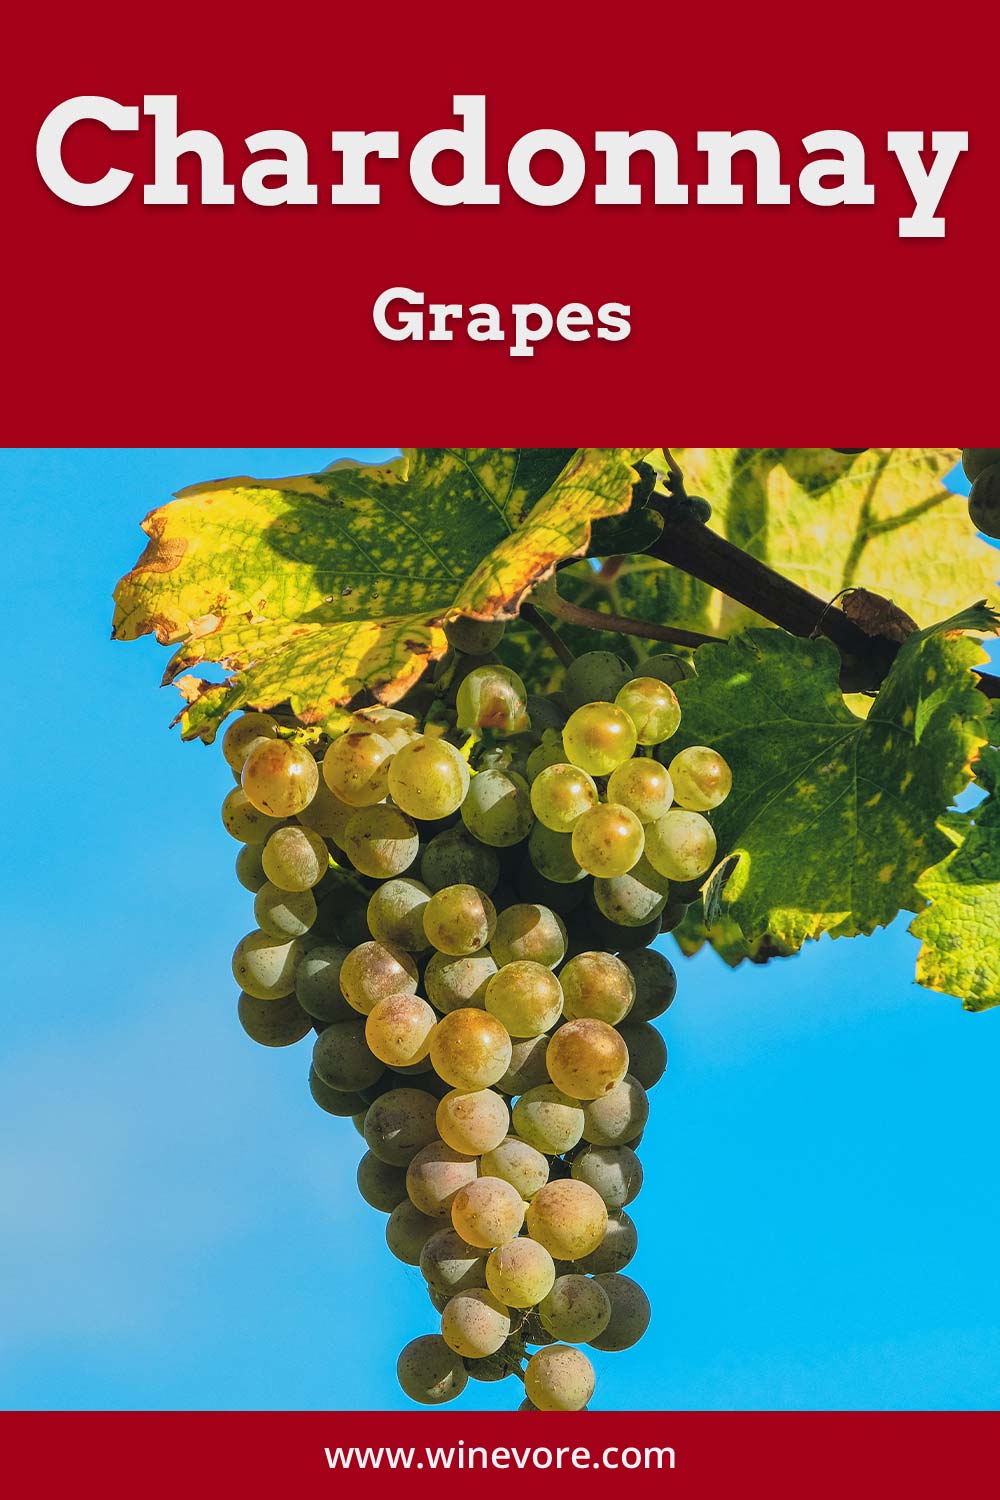 Green grapes on a tree - Chardonnay Grapes